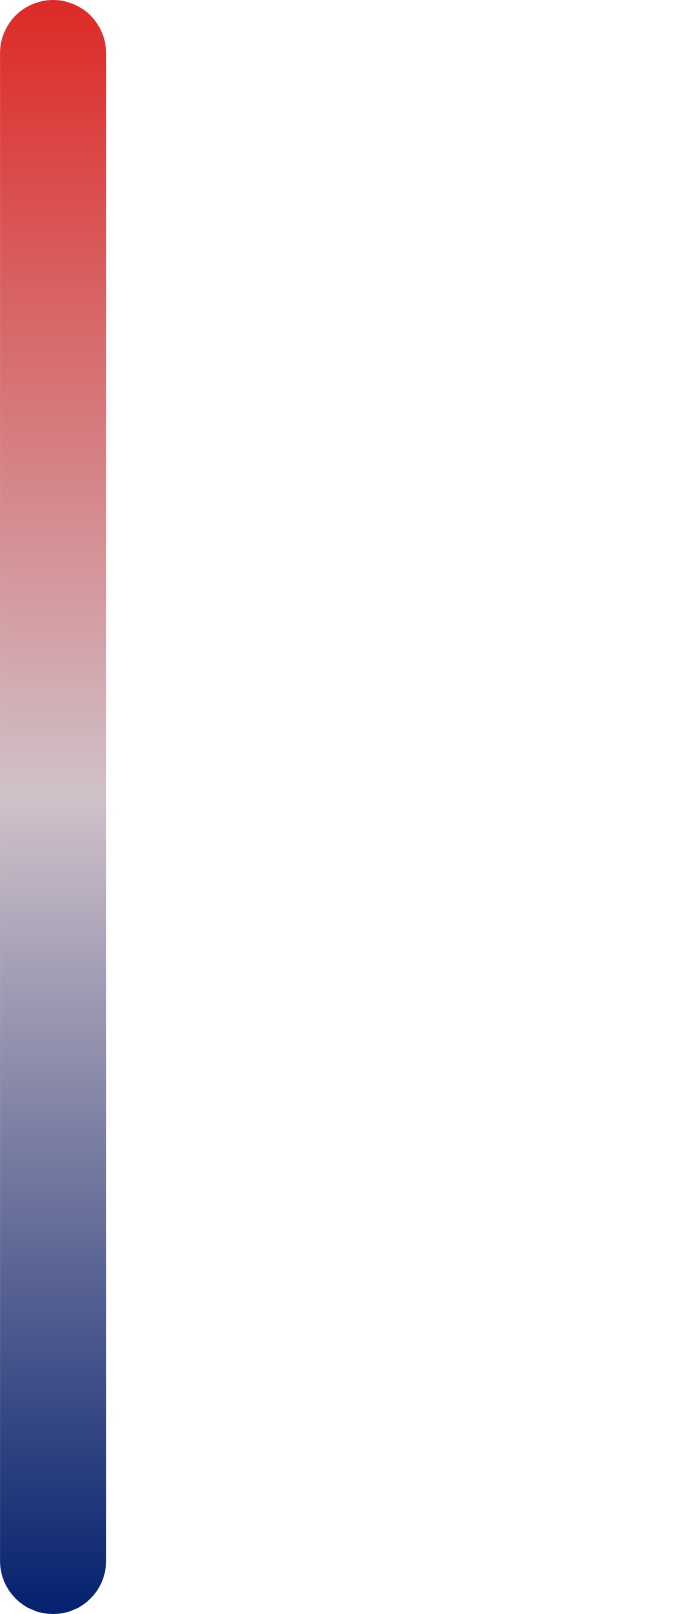 Aspen Aerogels logo pour fonds sombres (PNG transparent)